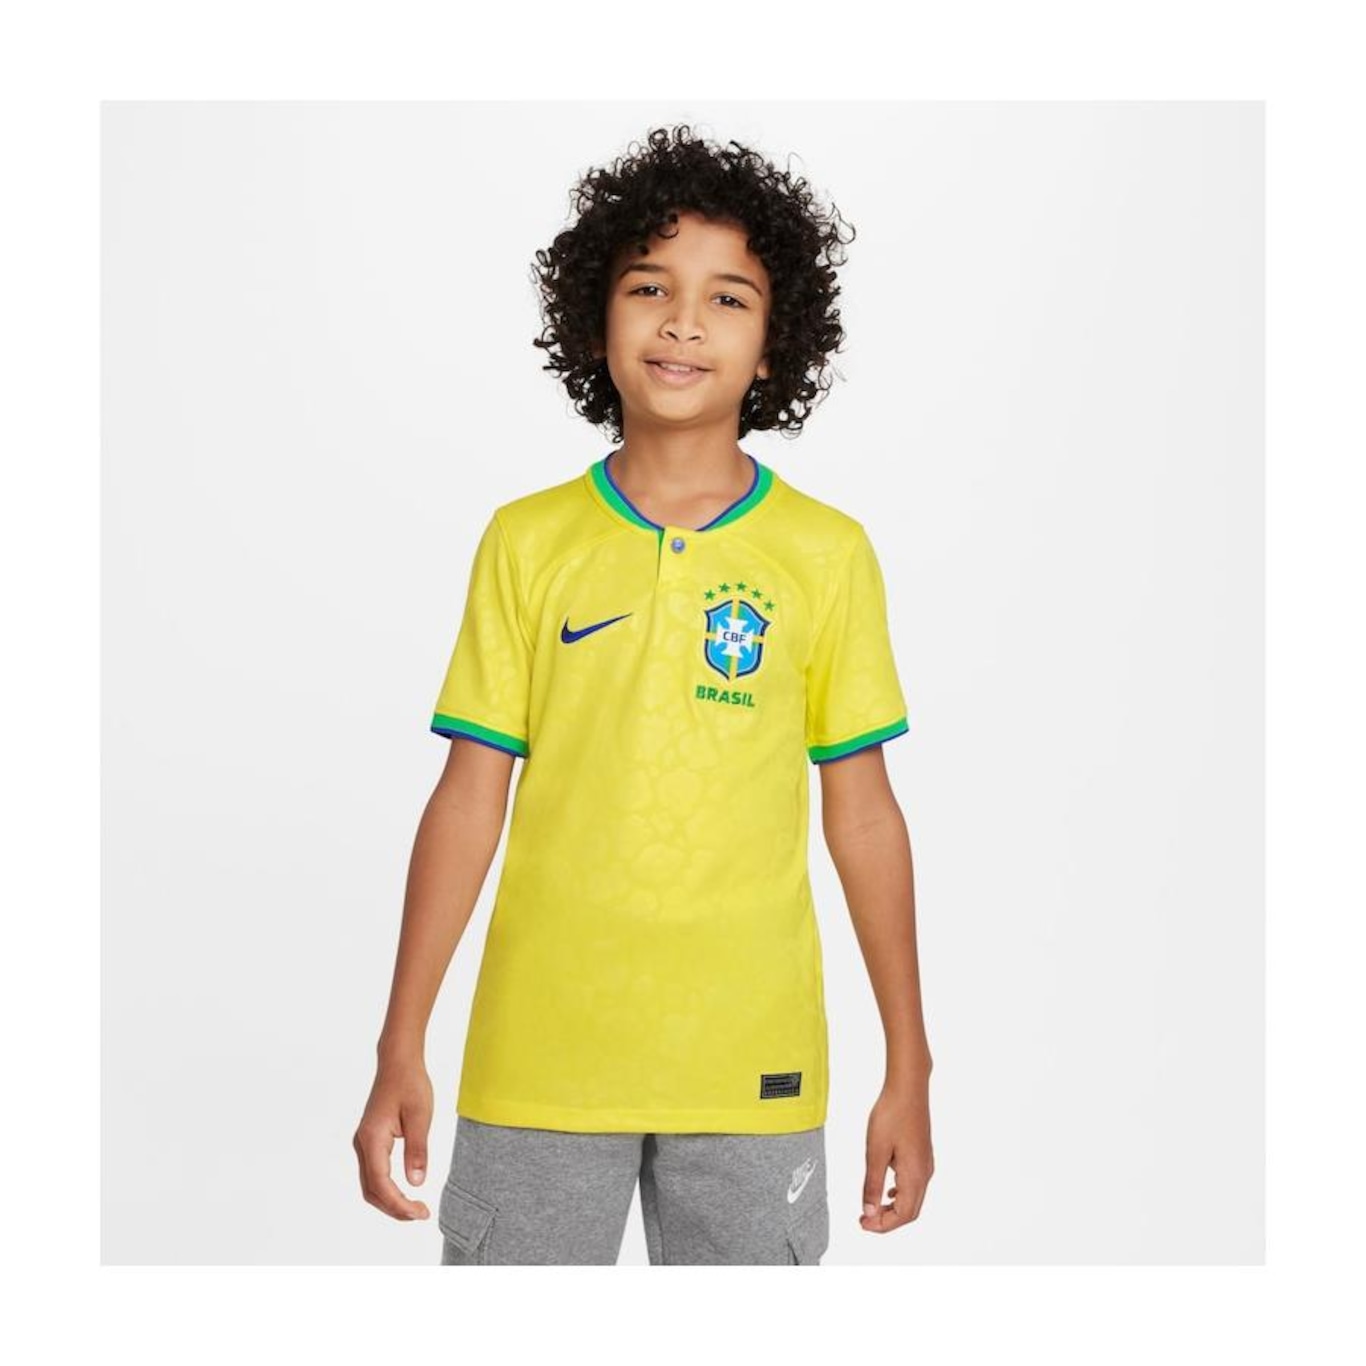 Camiseta Mma Brasil Torcedor - Masculina